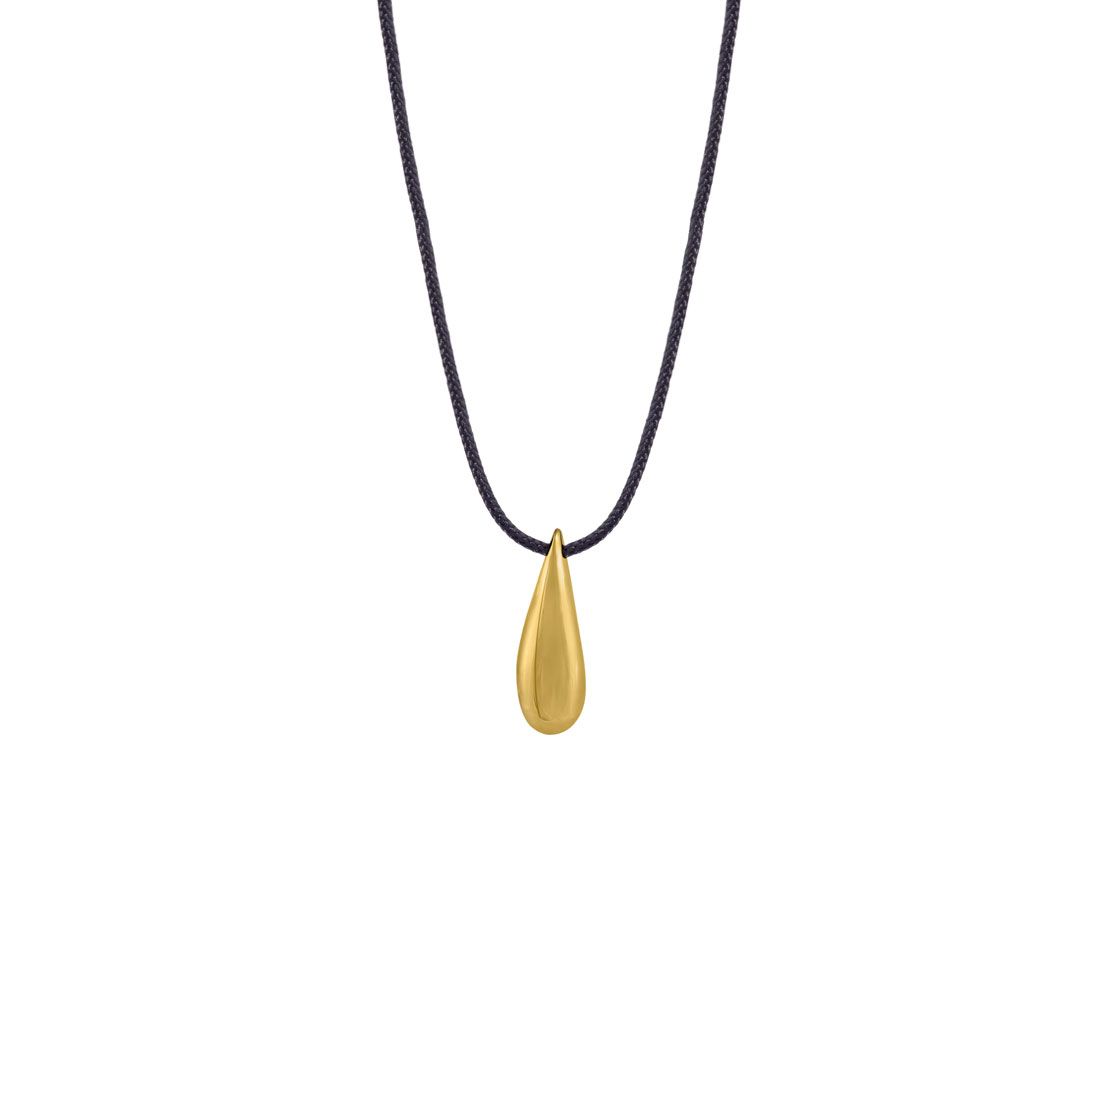 Gold drop pendant on a black cord.